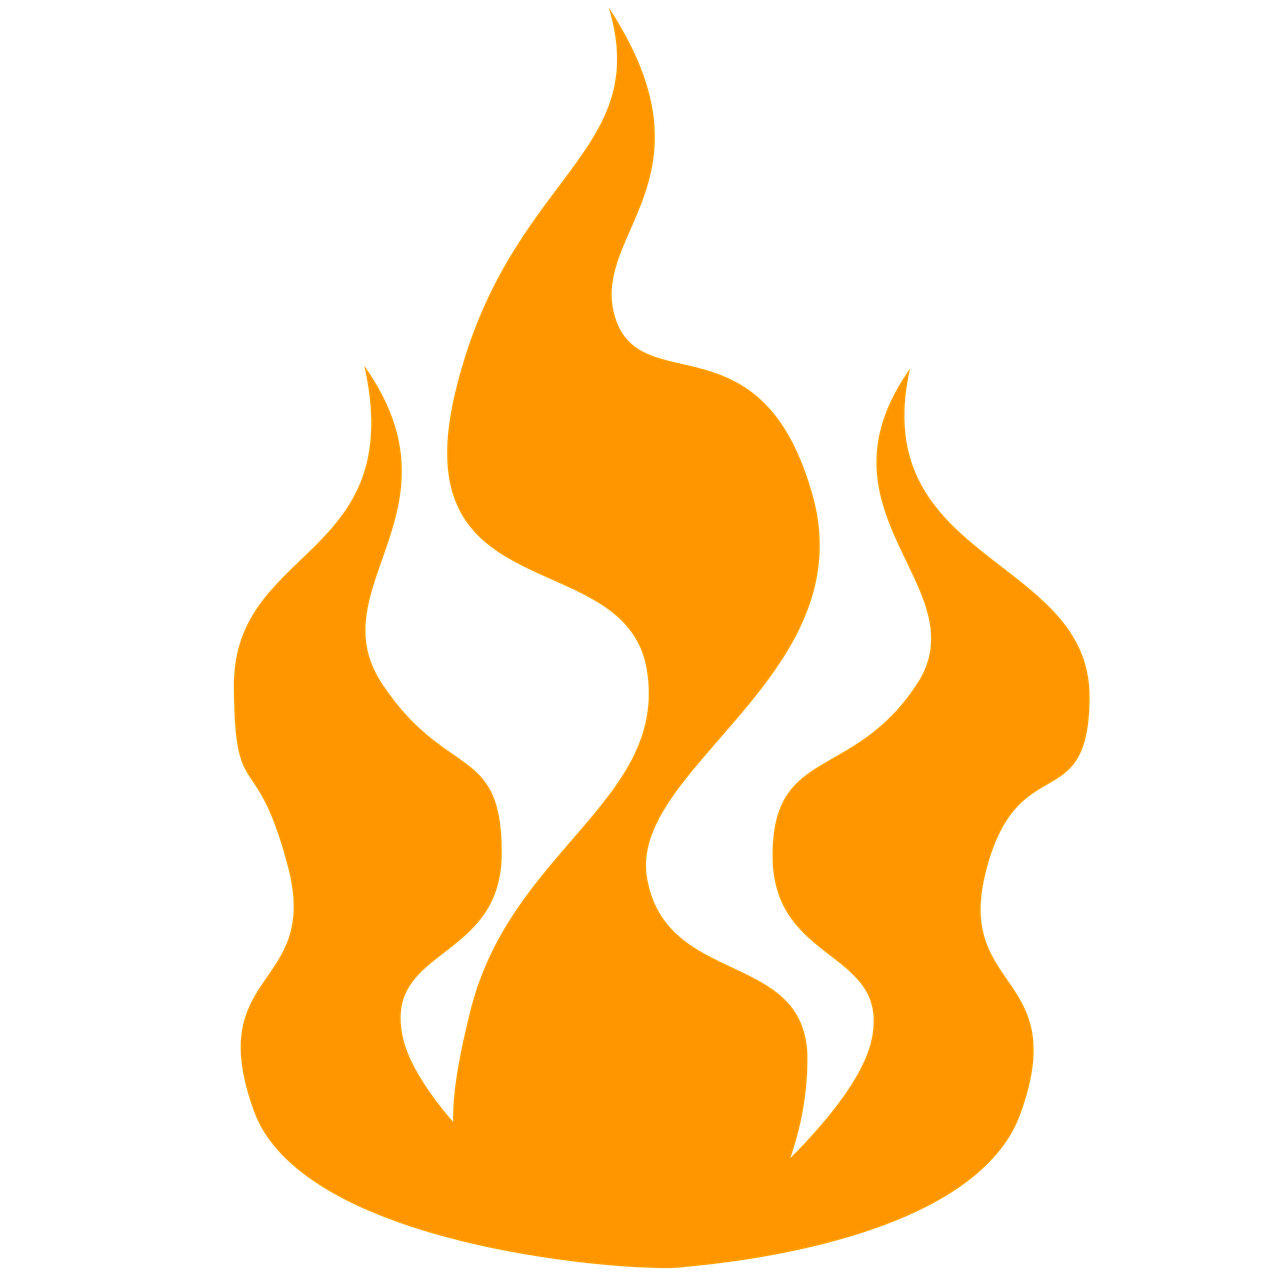 Burn Effect PNG High-Quality Image